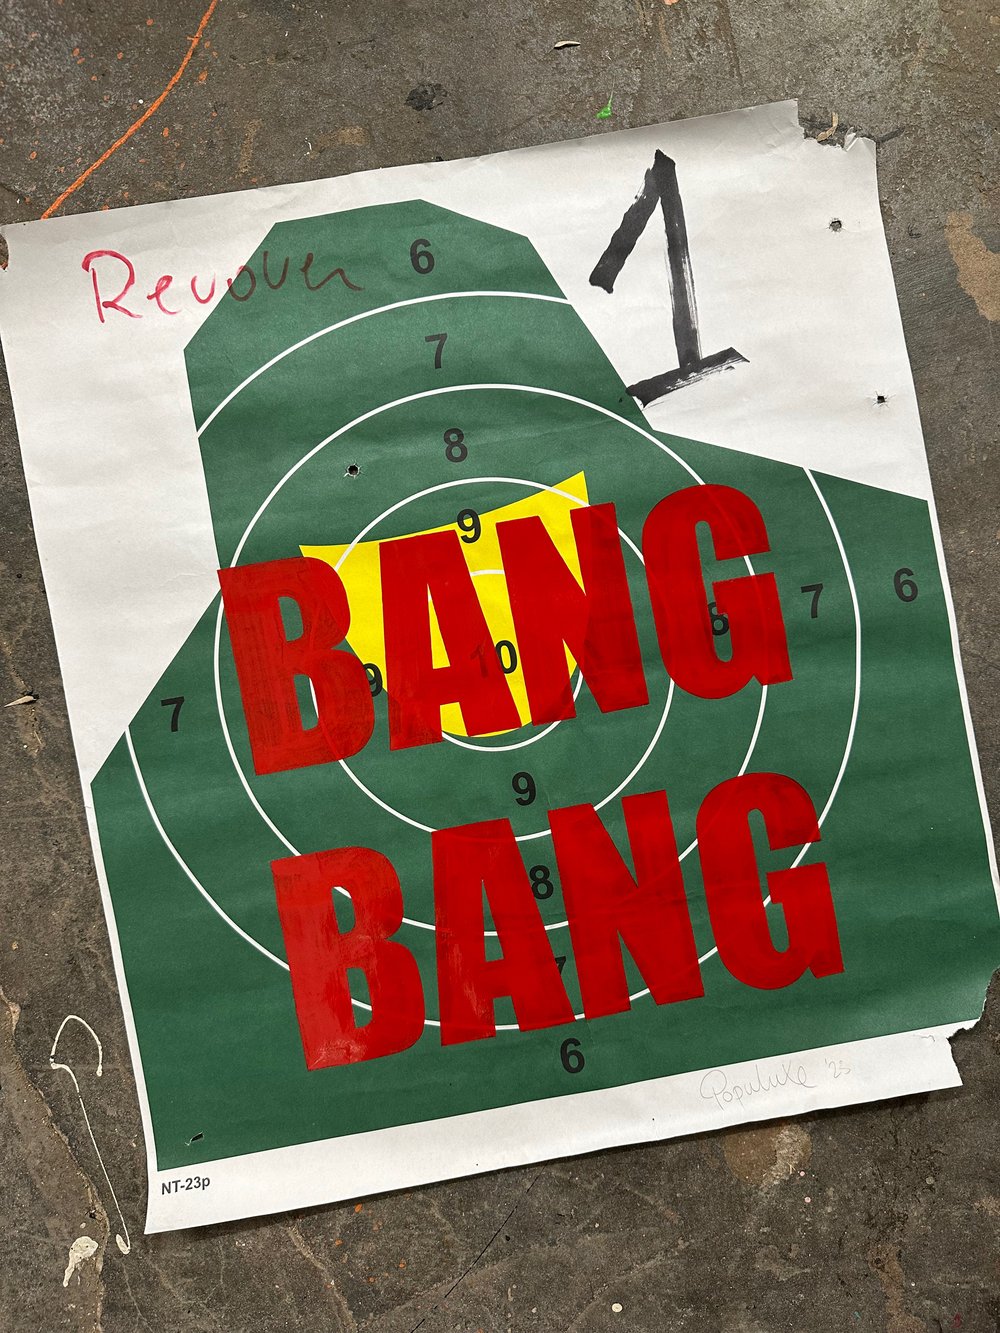 Image of Shooting Range Target Bang Bang Revolver